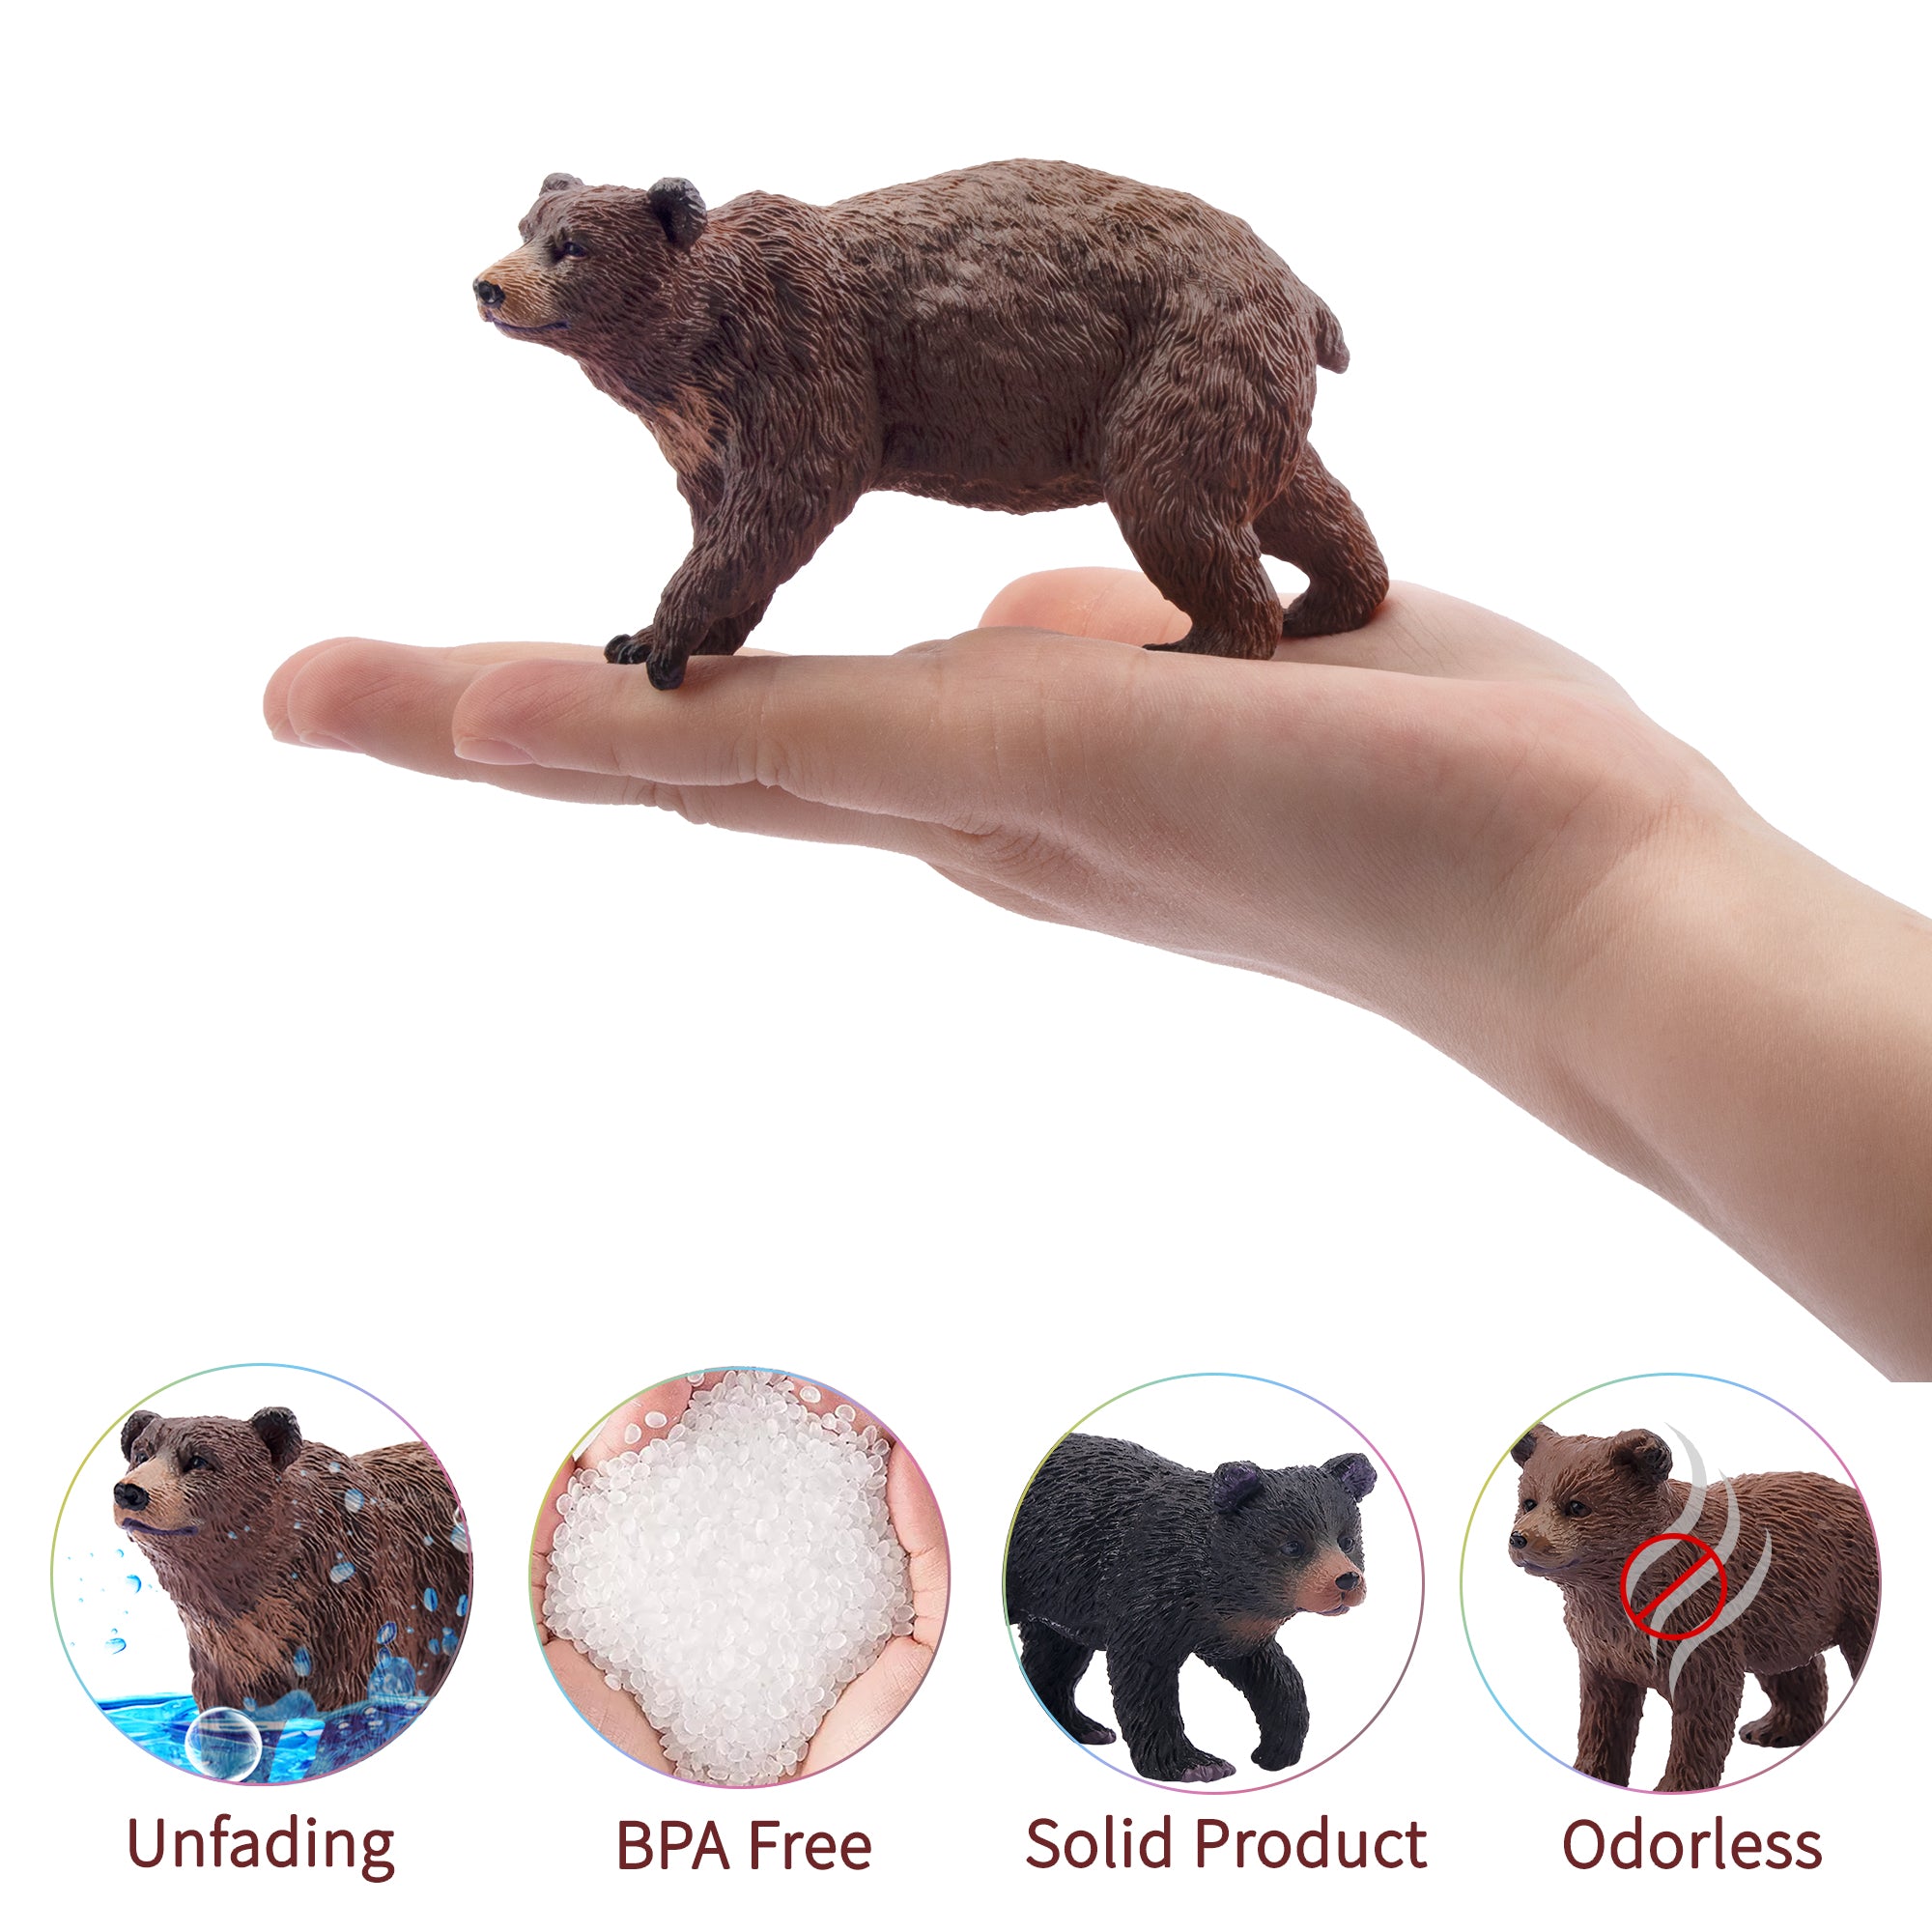 6-Piece Bear Figurines Playset with Brown & Black Bears-on hand